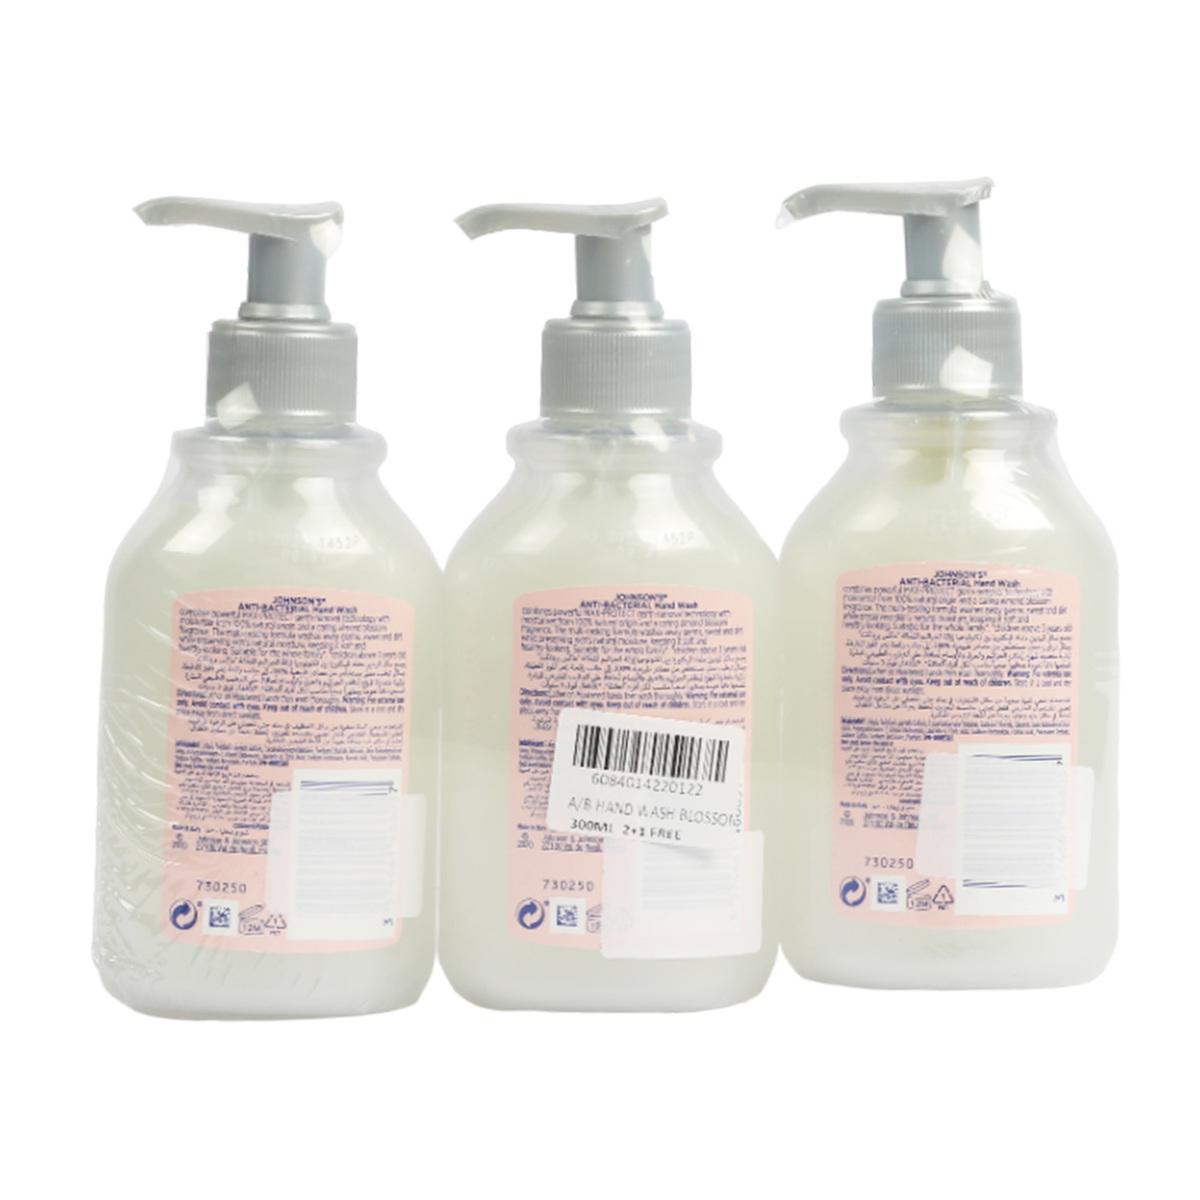 Johnson's Handwash Antibacterial Assorted 3 x 300 ml